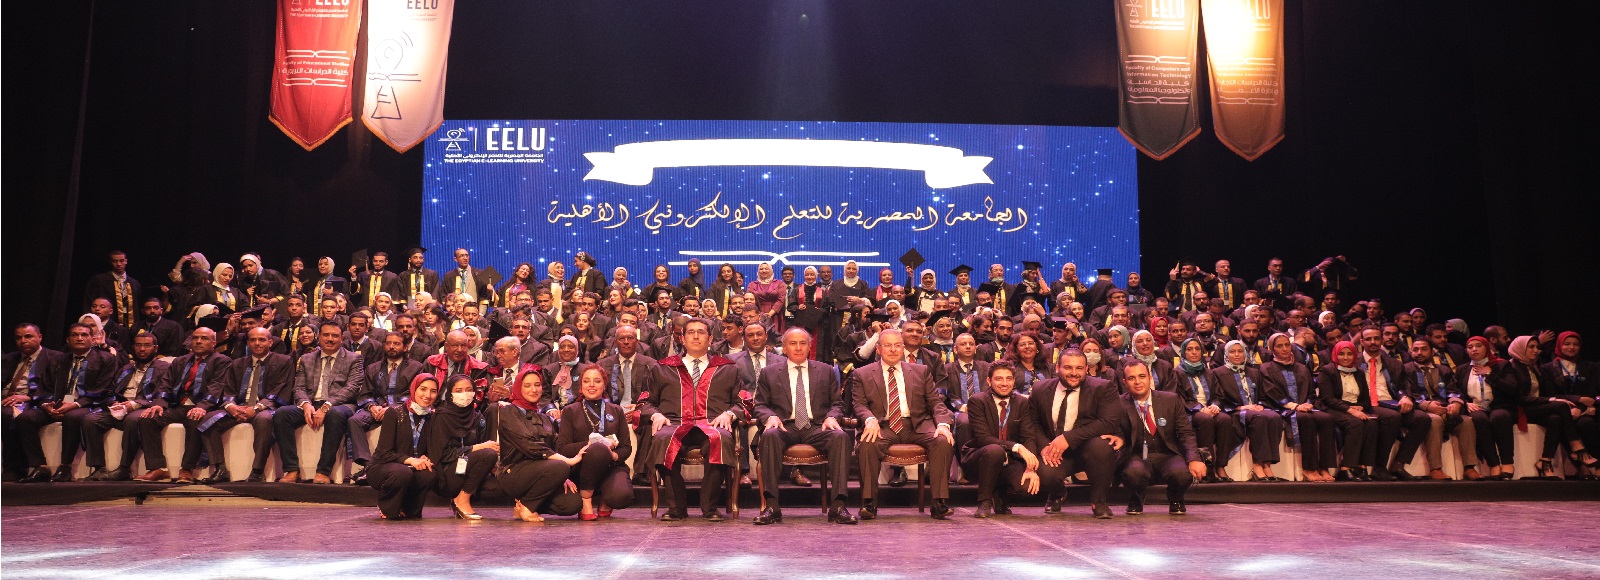 Egyptian Elearning University - Graduation Ceremony 2020-2021